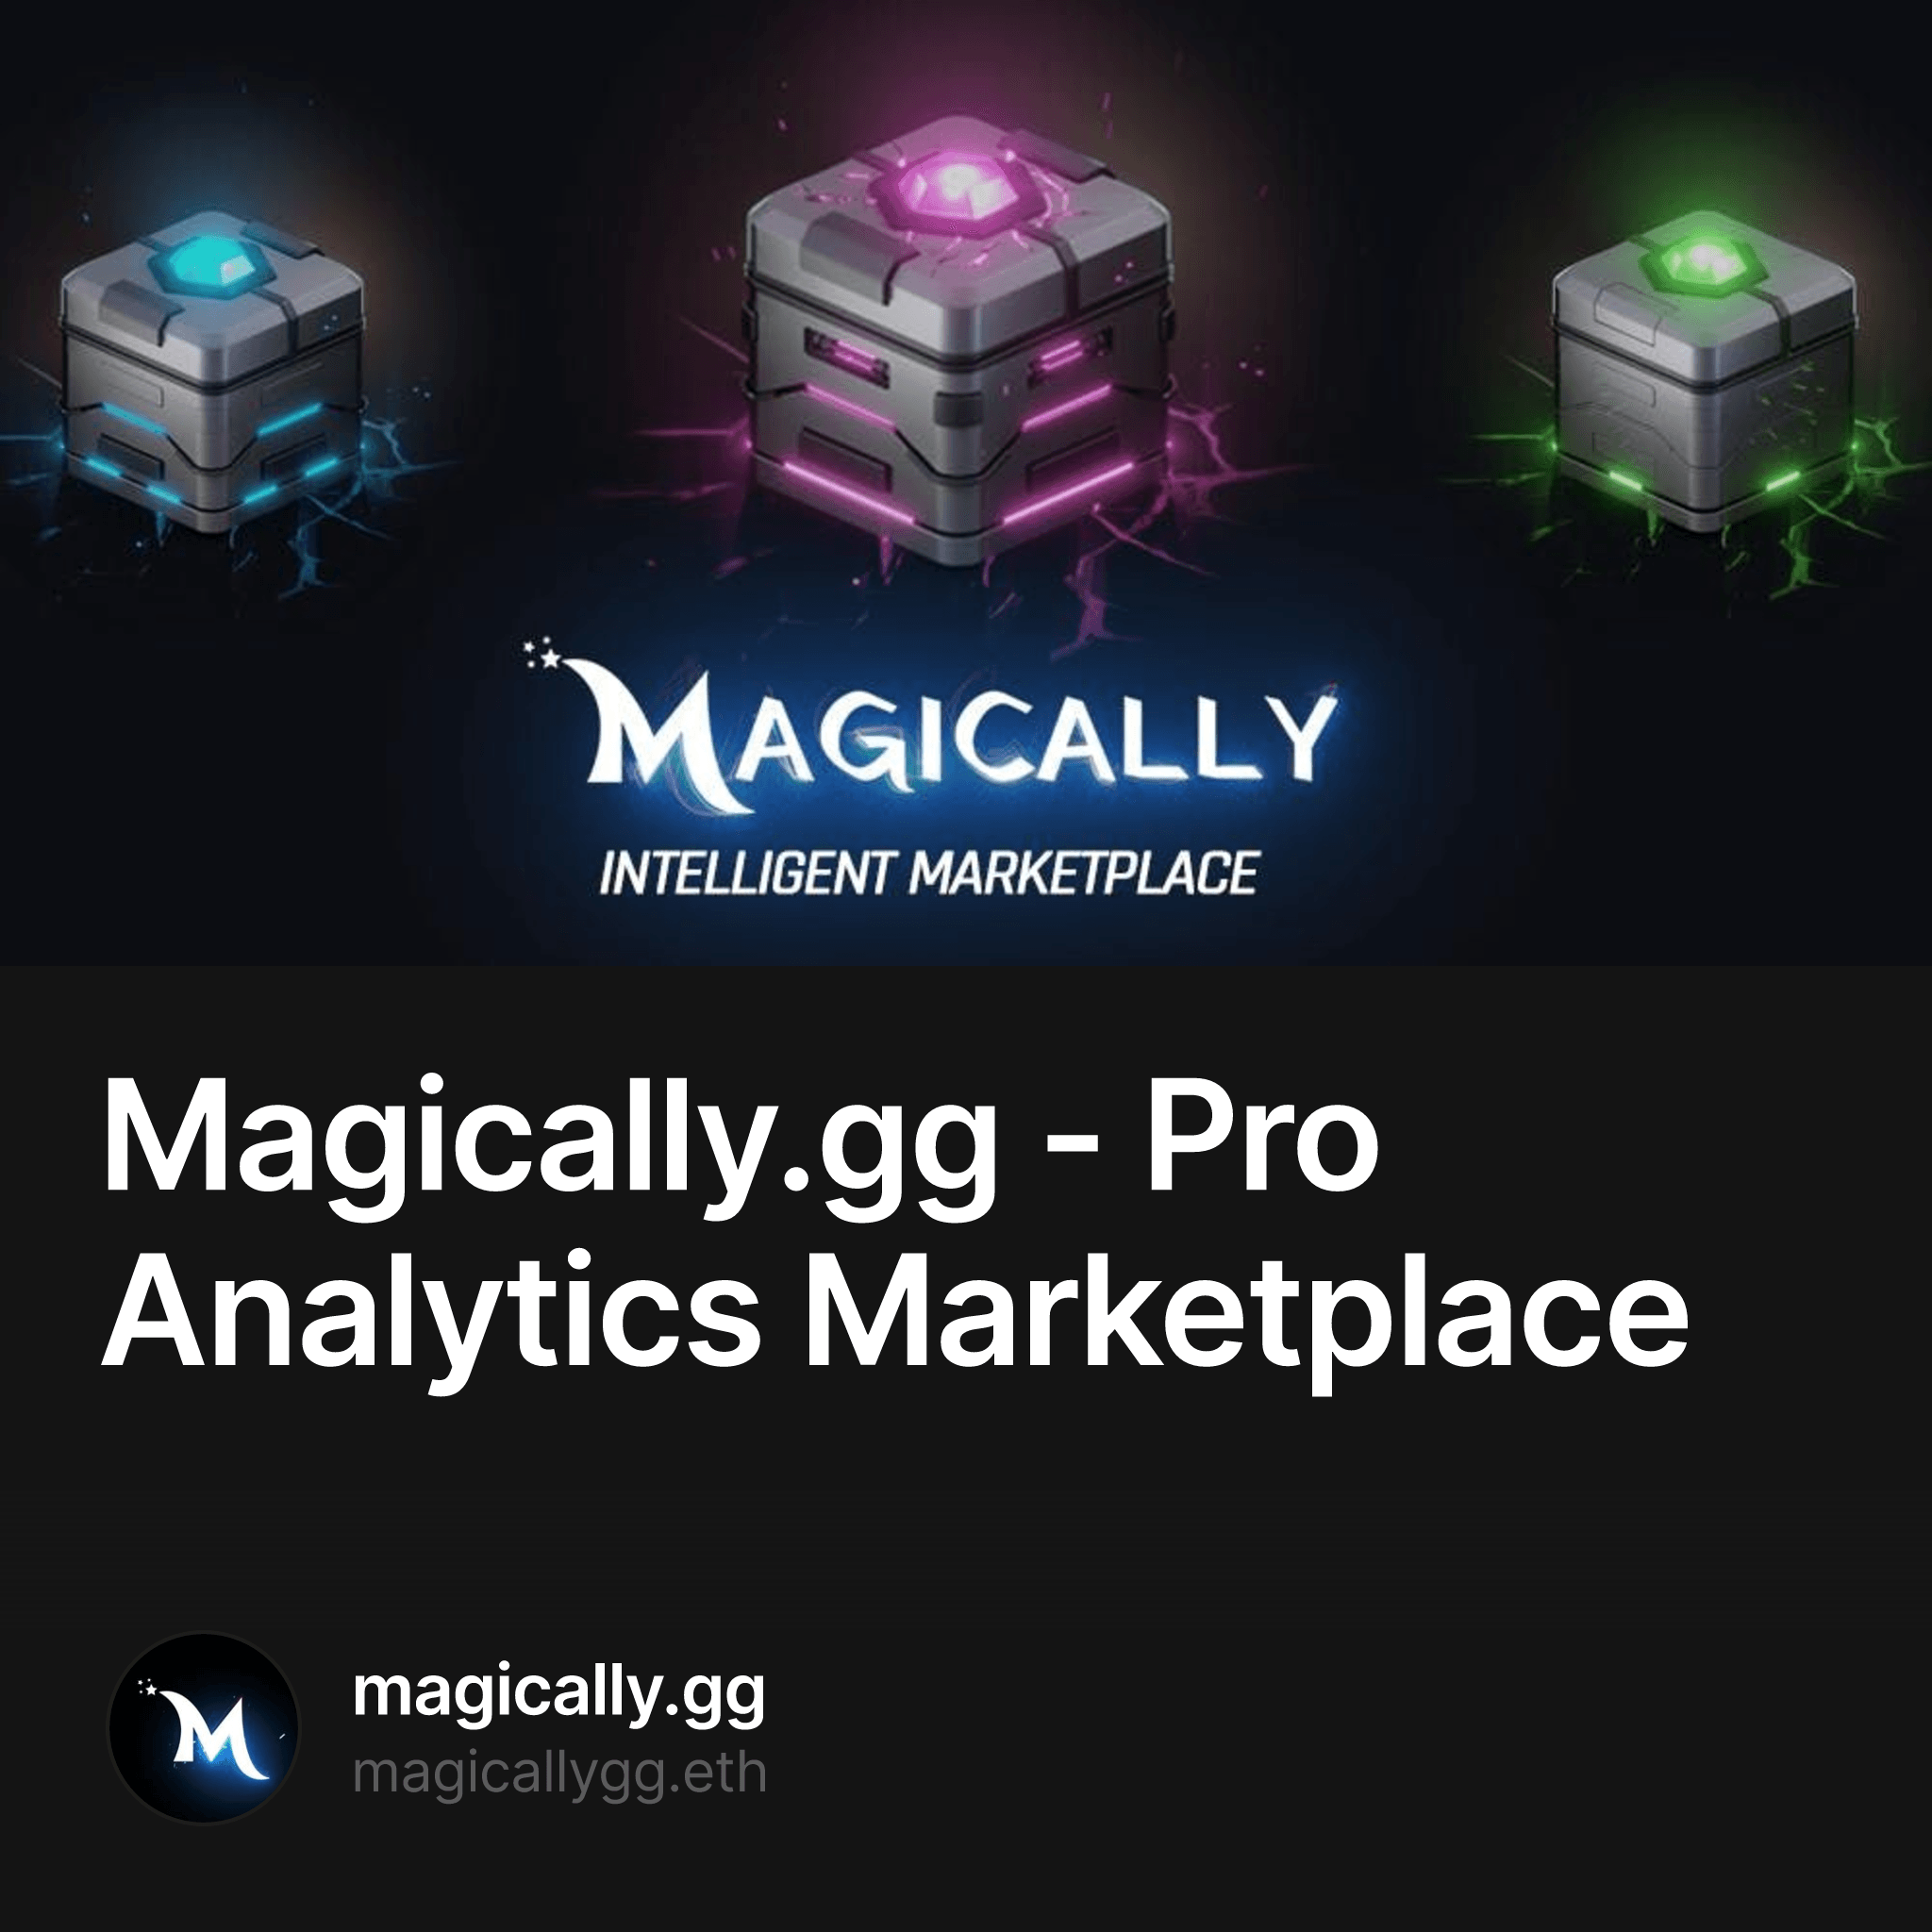 Magically.gg - Pro Analytics Marketplace 522/1000